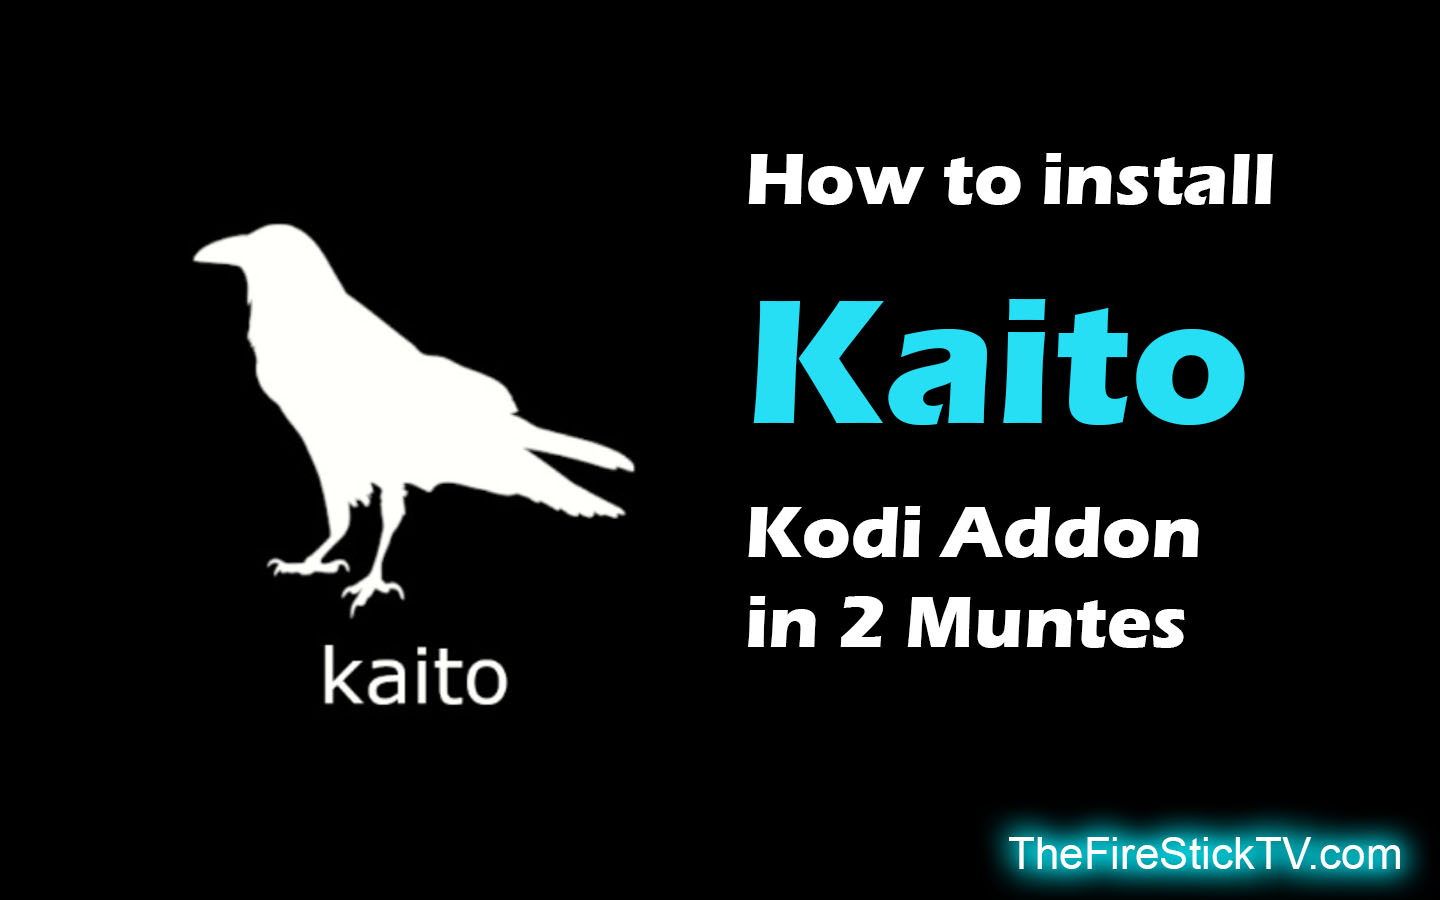 Install Kaito Kodi Addon in 2 Minutes - TheFireStickTV.com